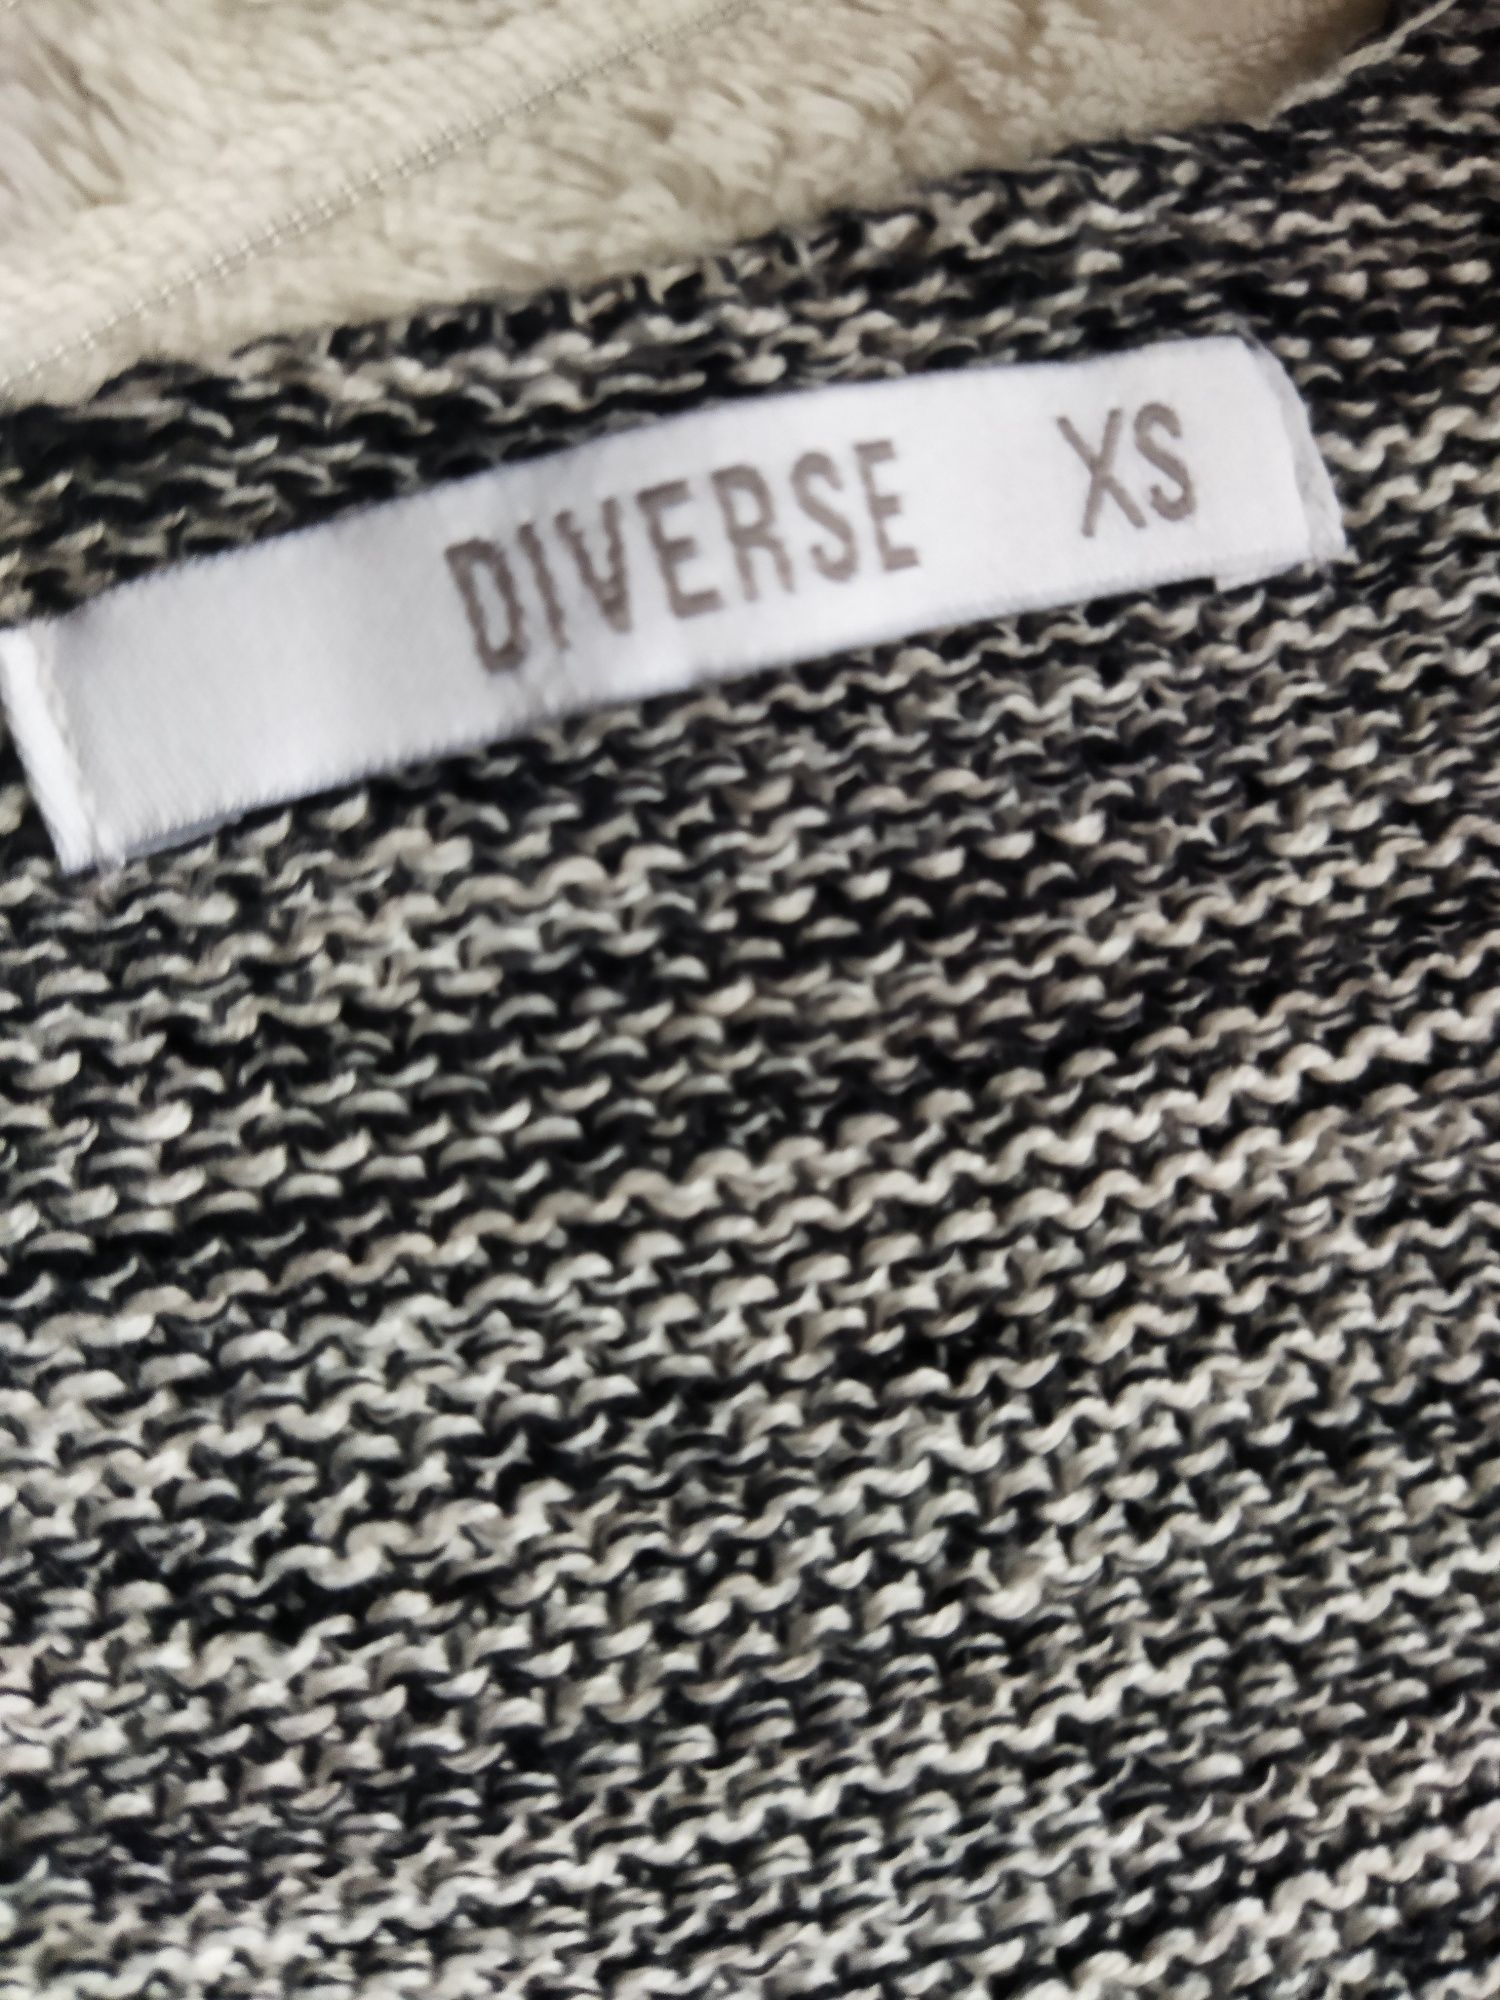 Sweterek szary Diverse xs,s nowy